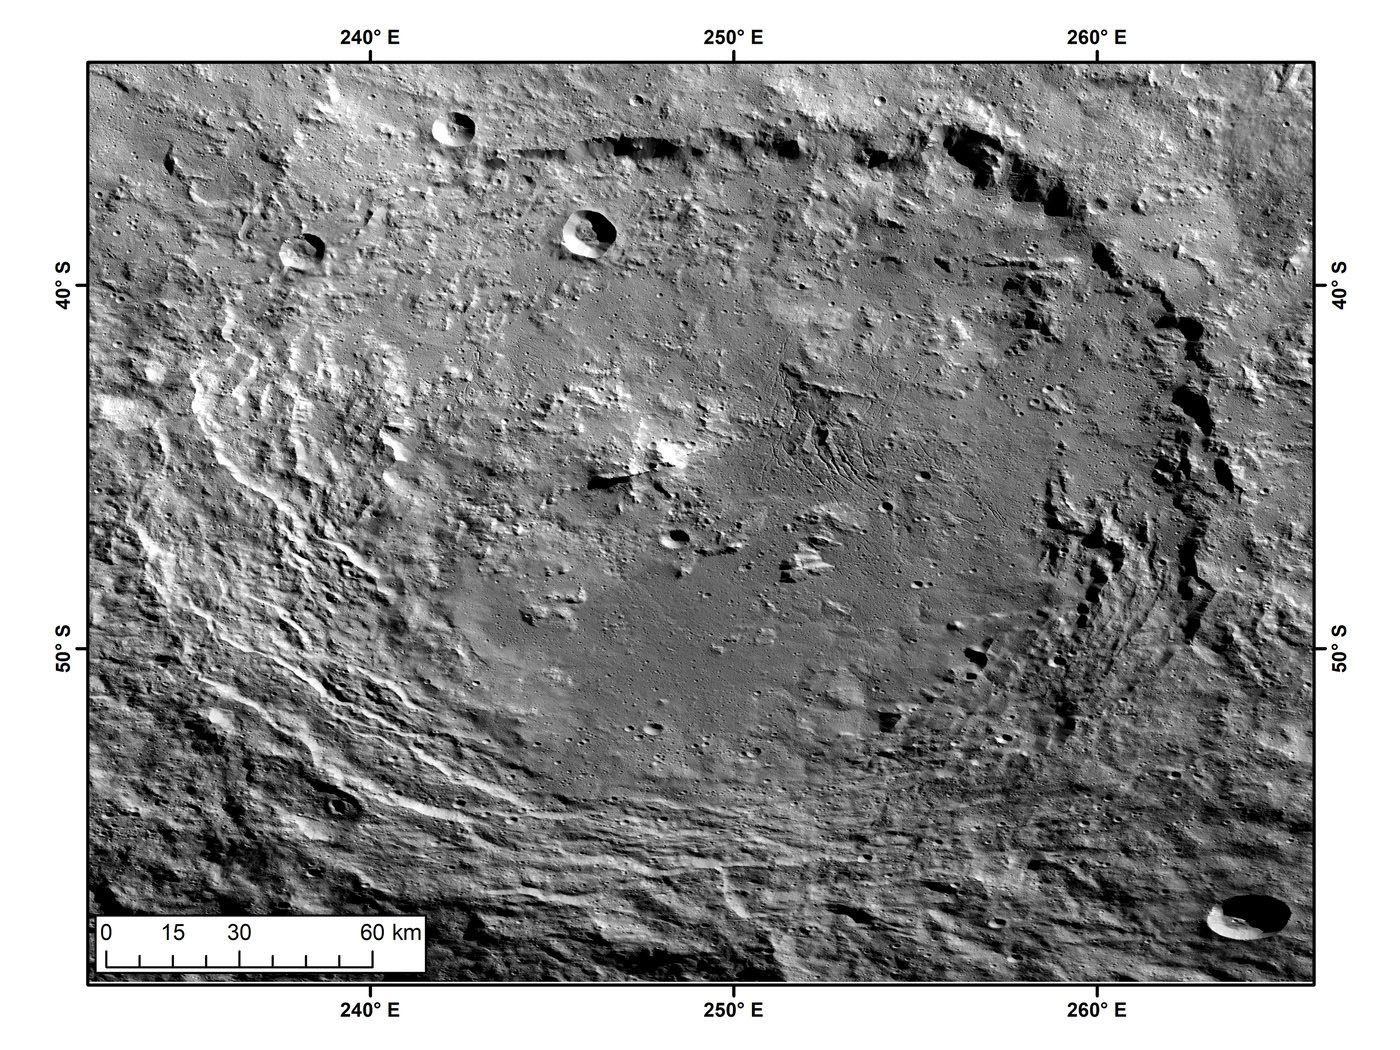 Urvara crater on Ceres